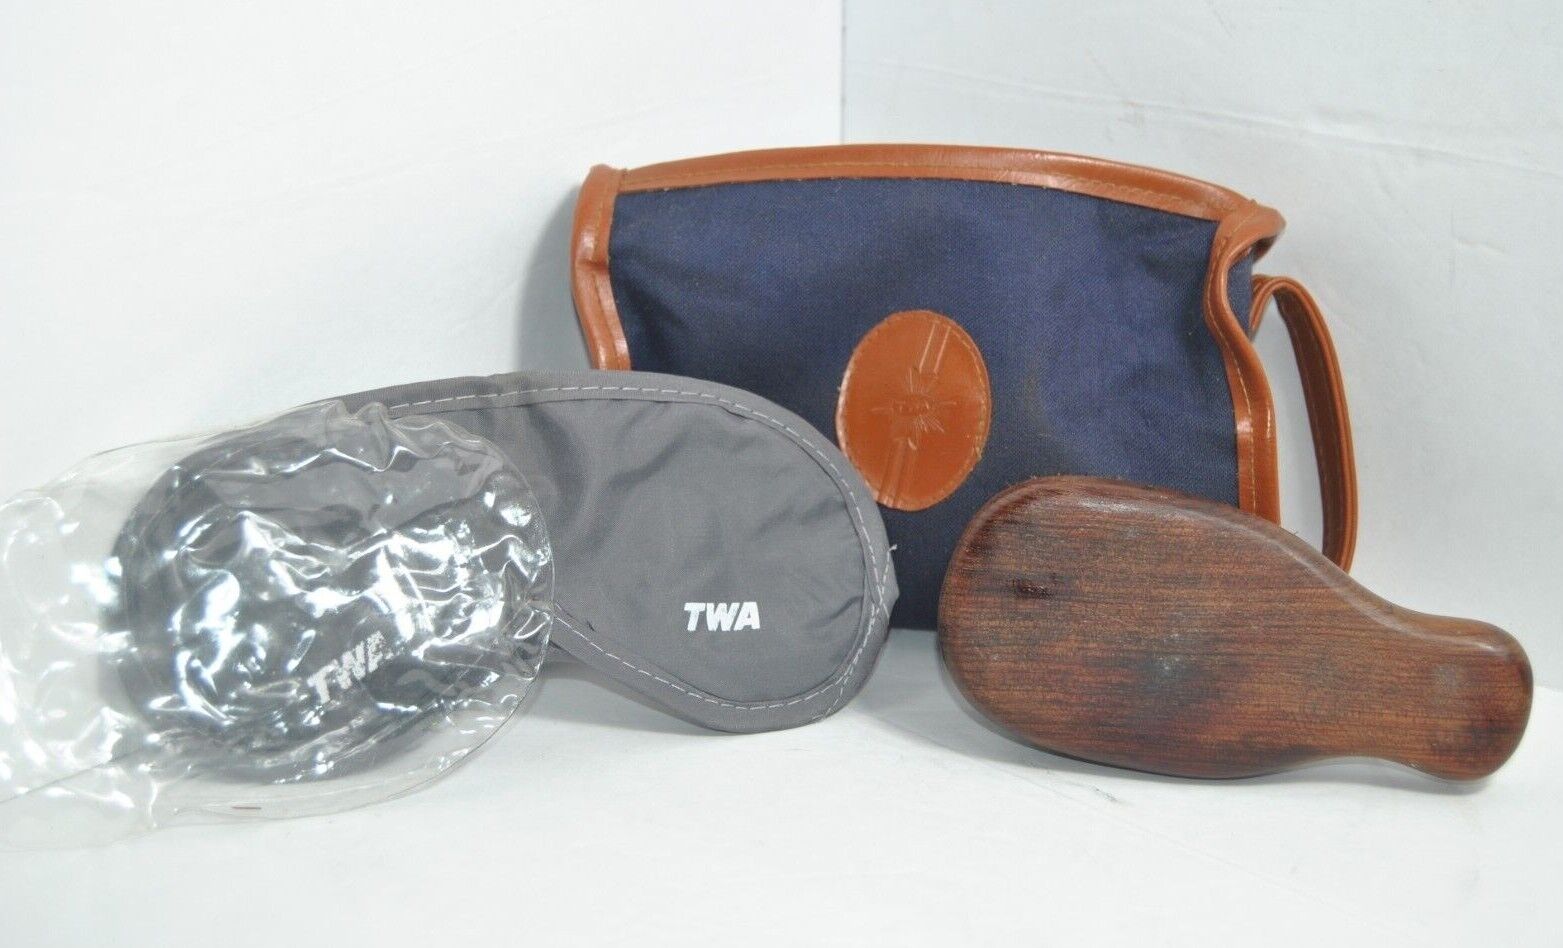 Lot of Two: Vintage TWA Sleeping Mask & Shoe Care Brush Rare Logo